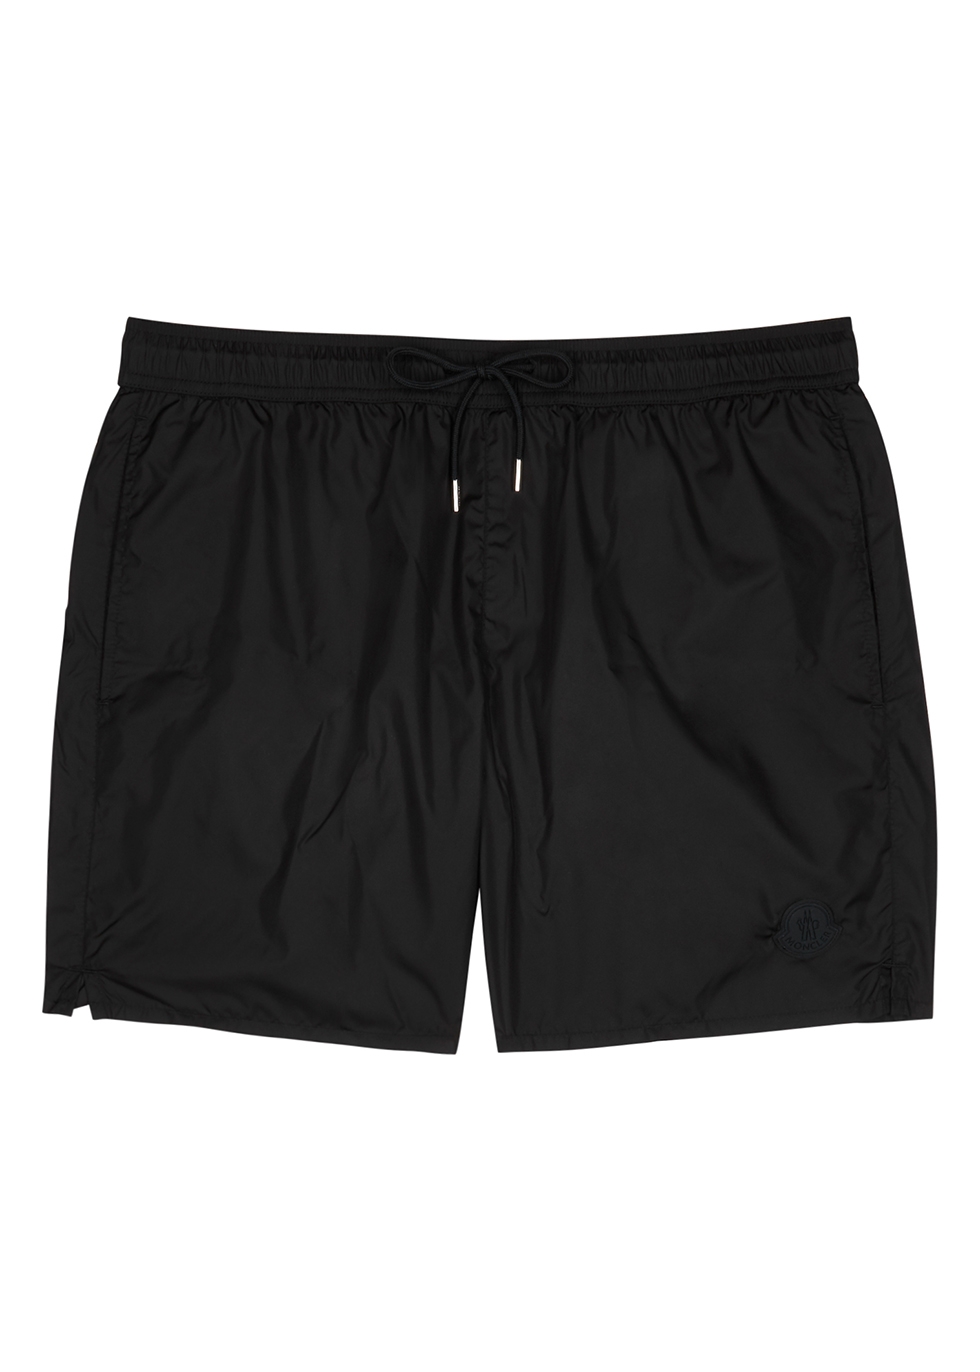 Black Moncler Shorts on Sale, 52% OFF | espirituviajero.com